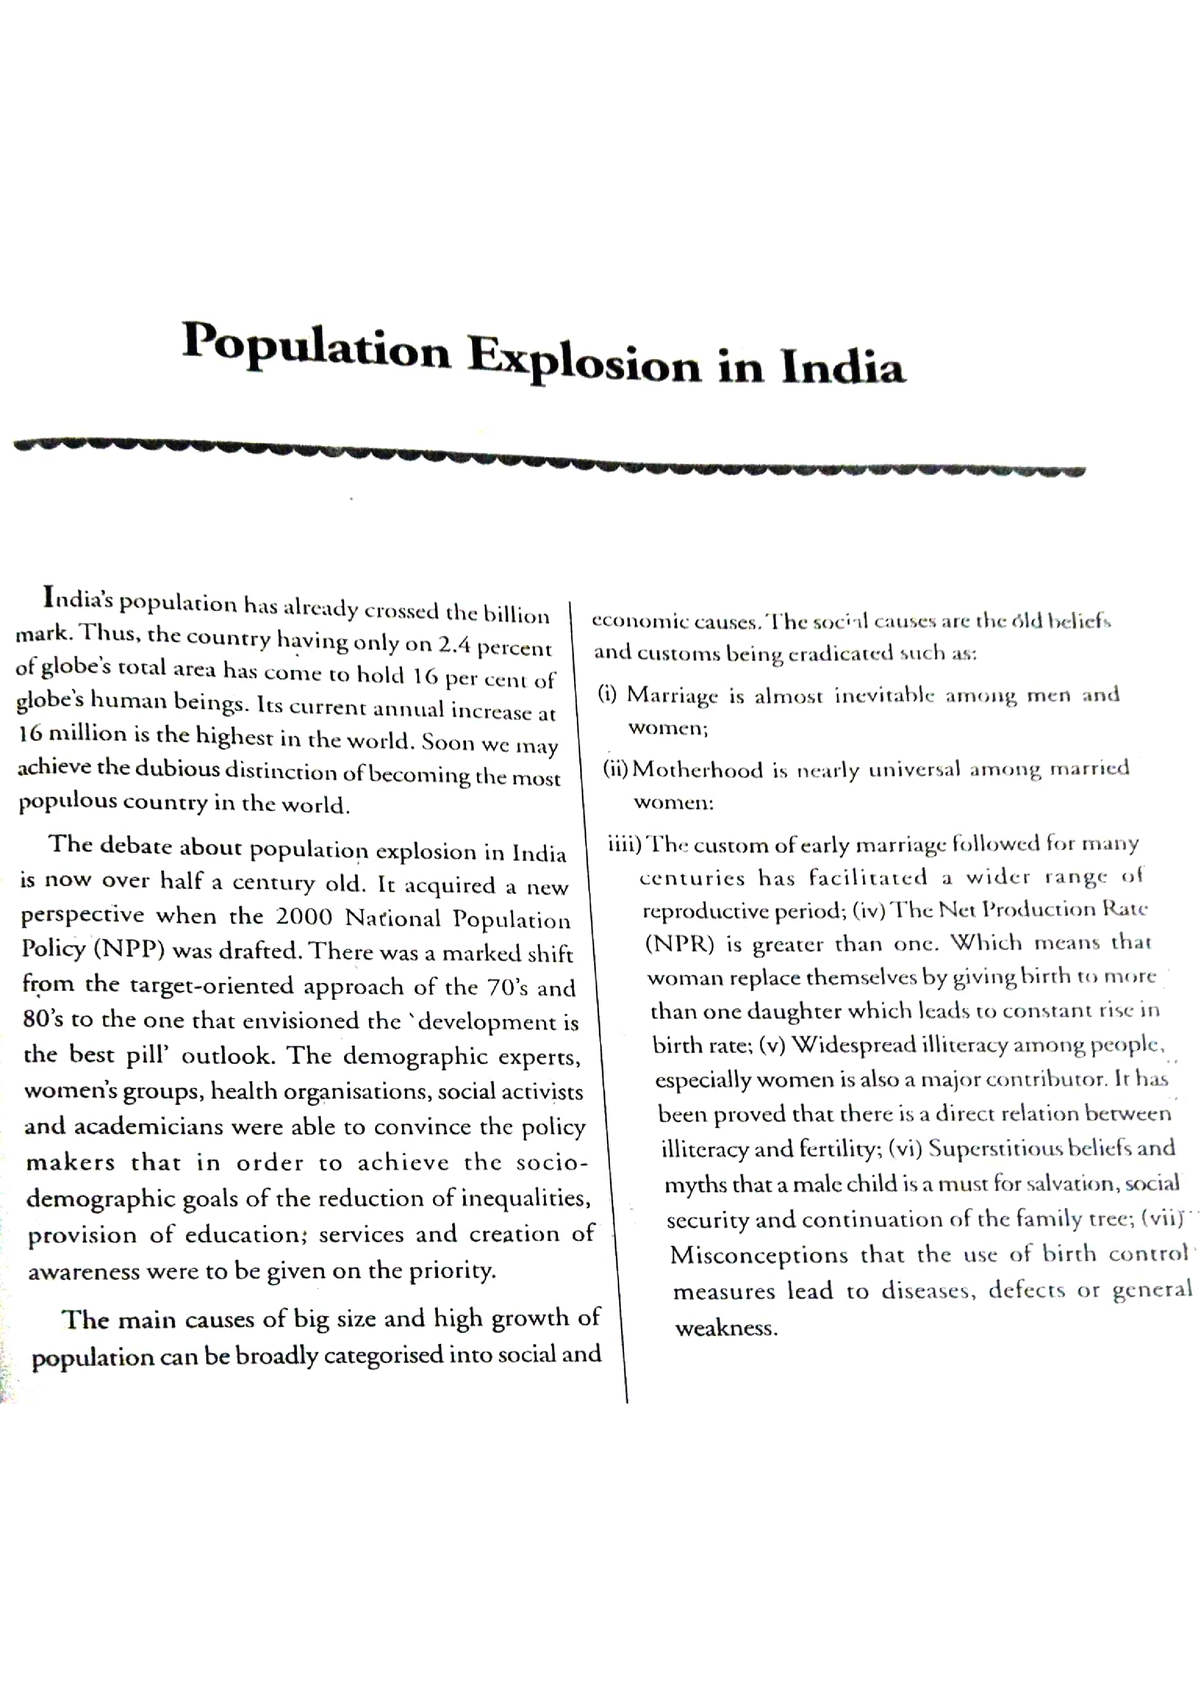 population explosion essay in india